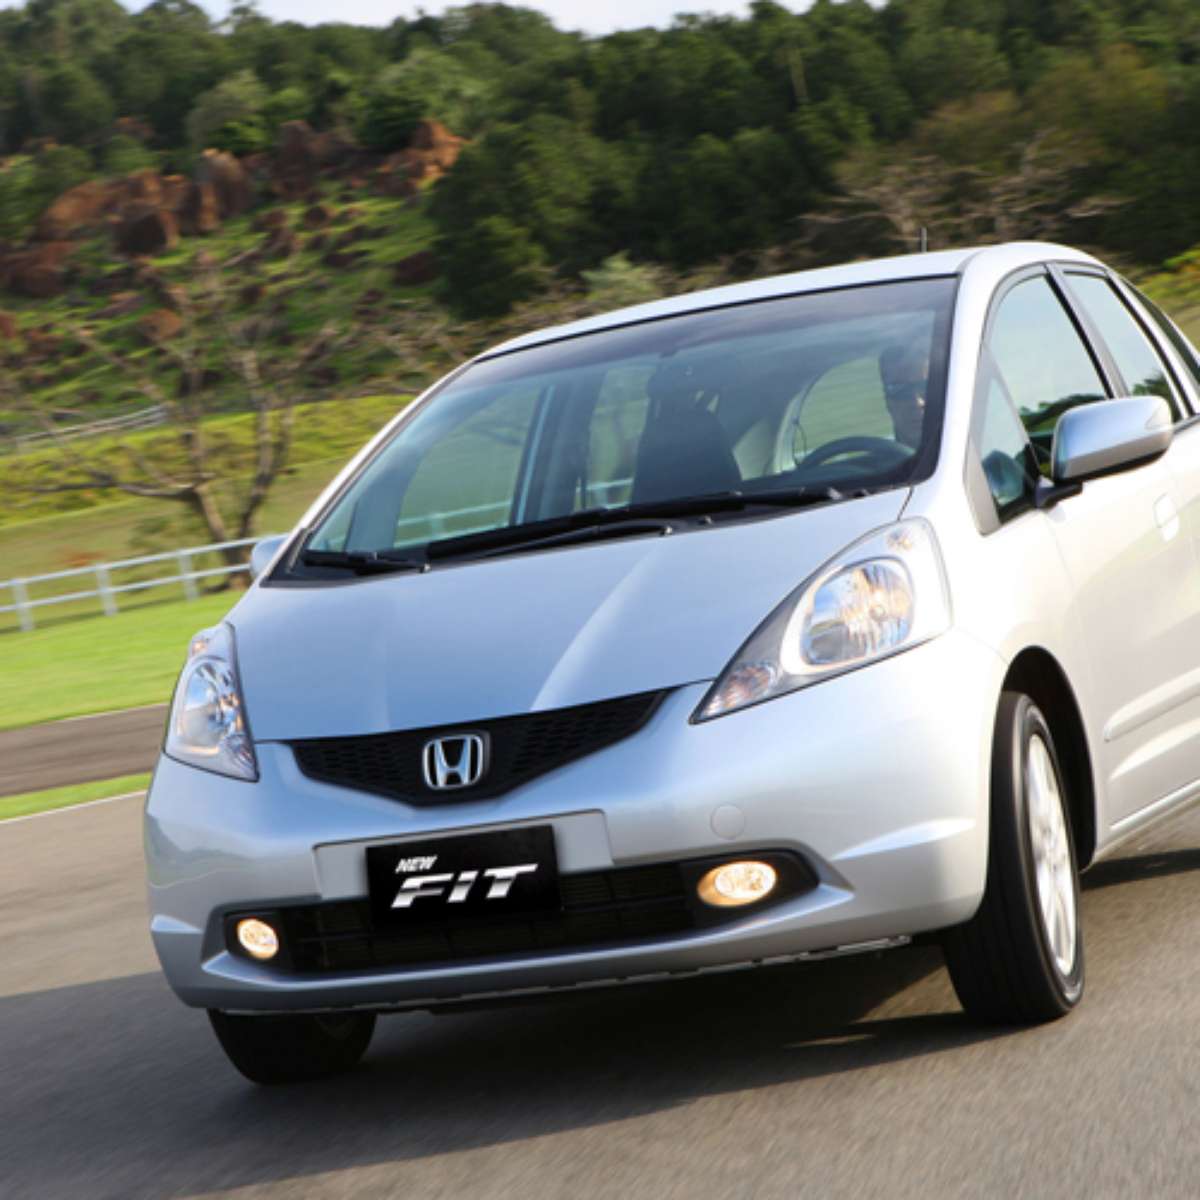 Honda Fit atinge 500 mil unidades produzidas no Brasil